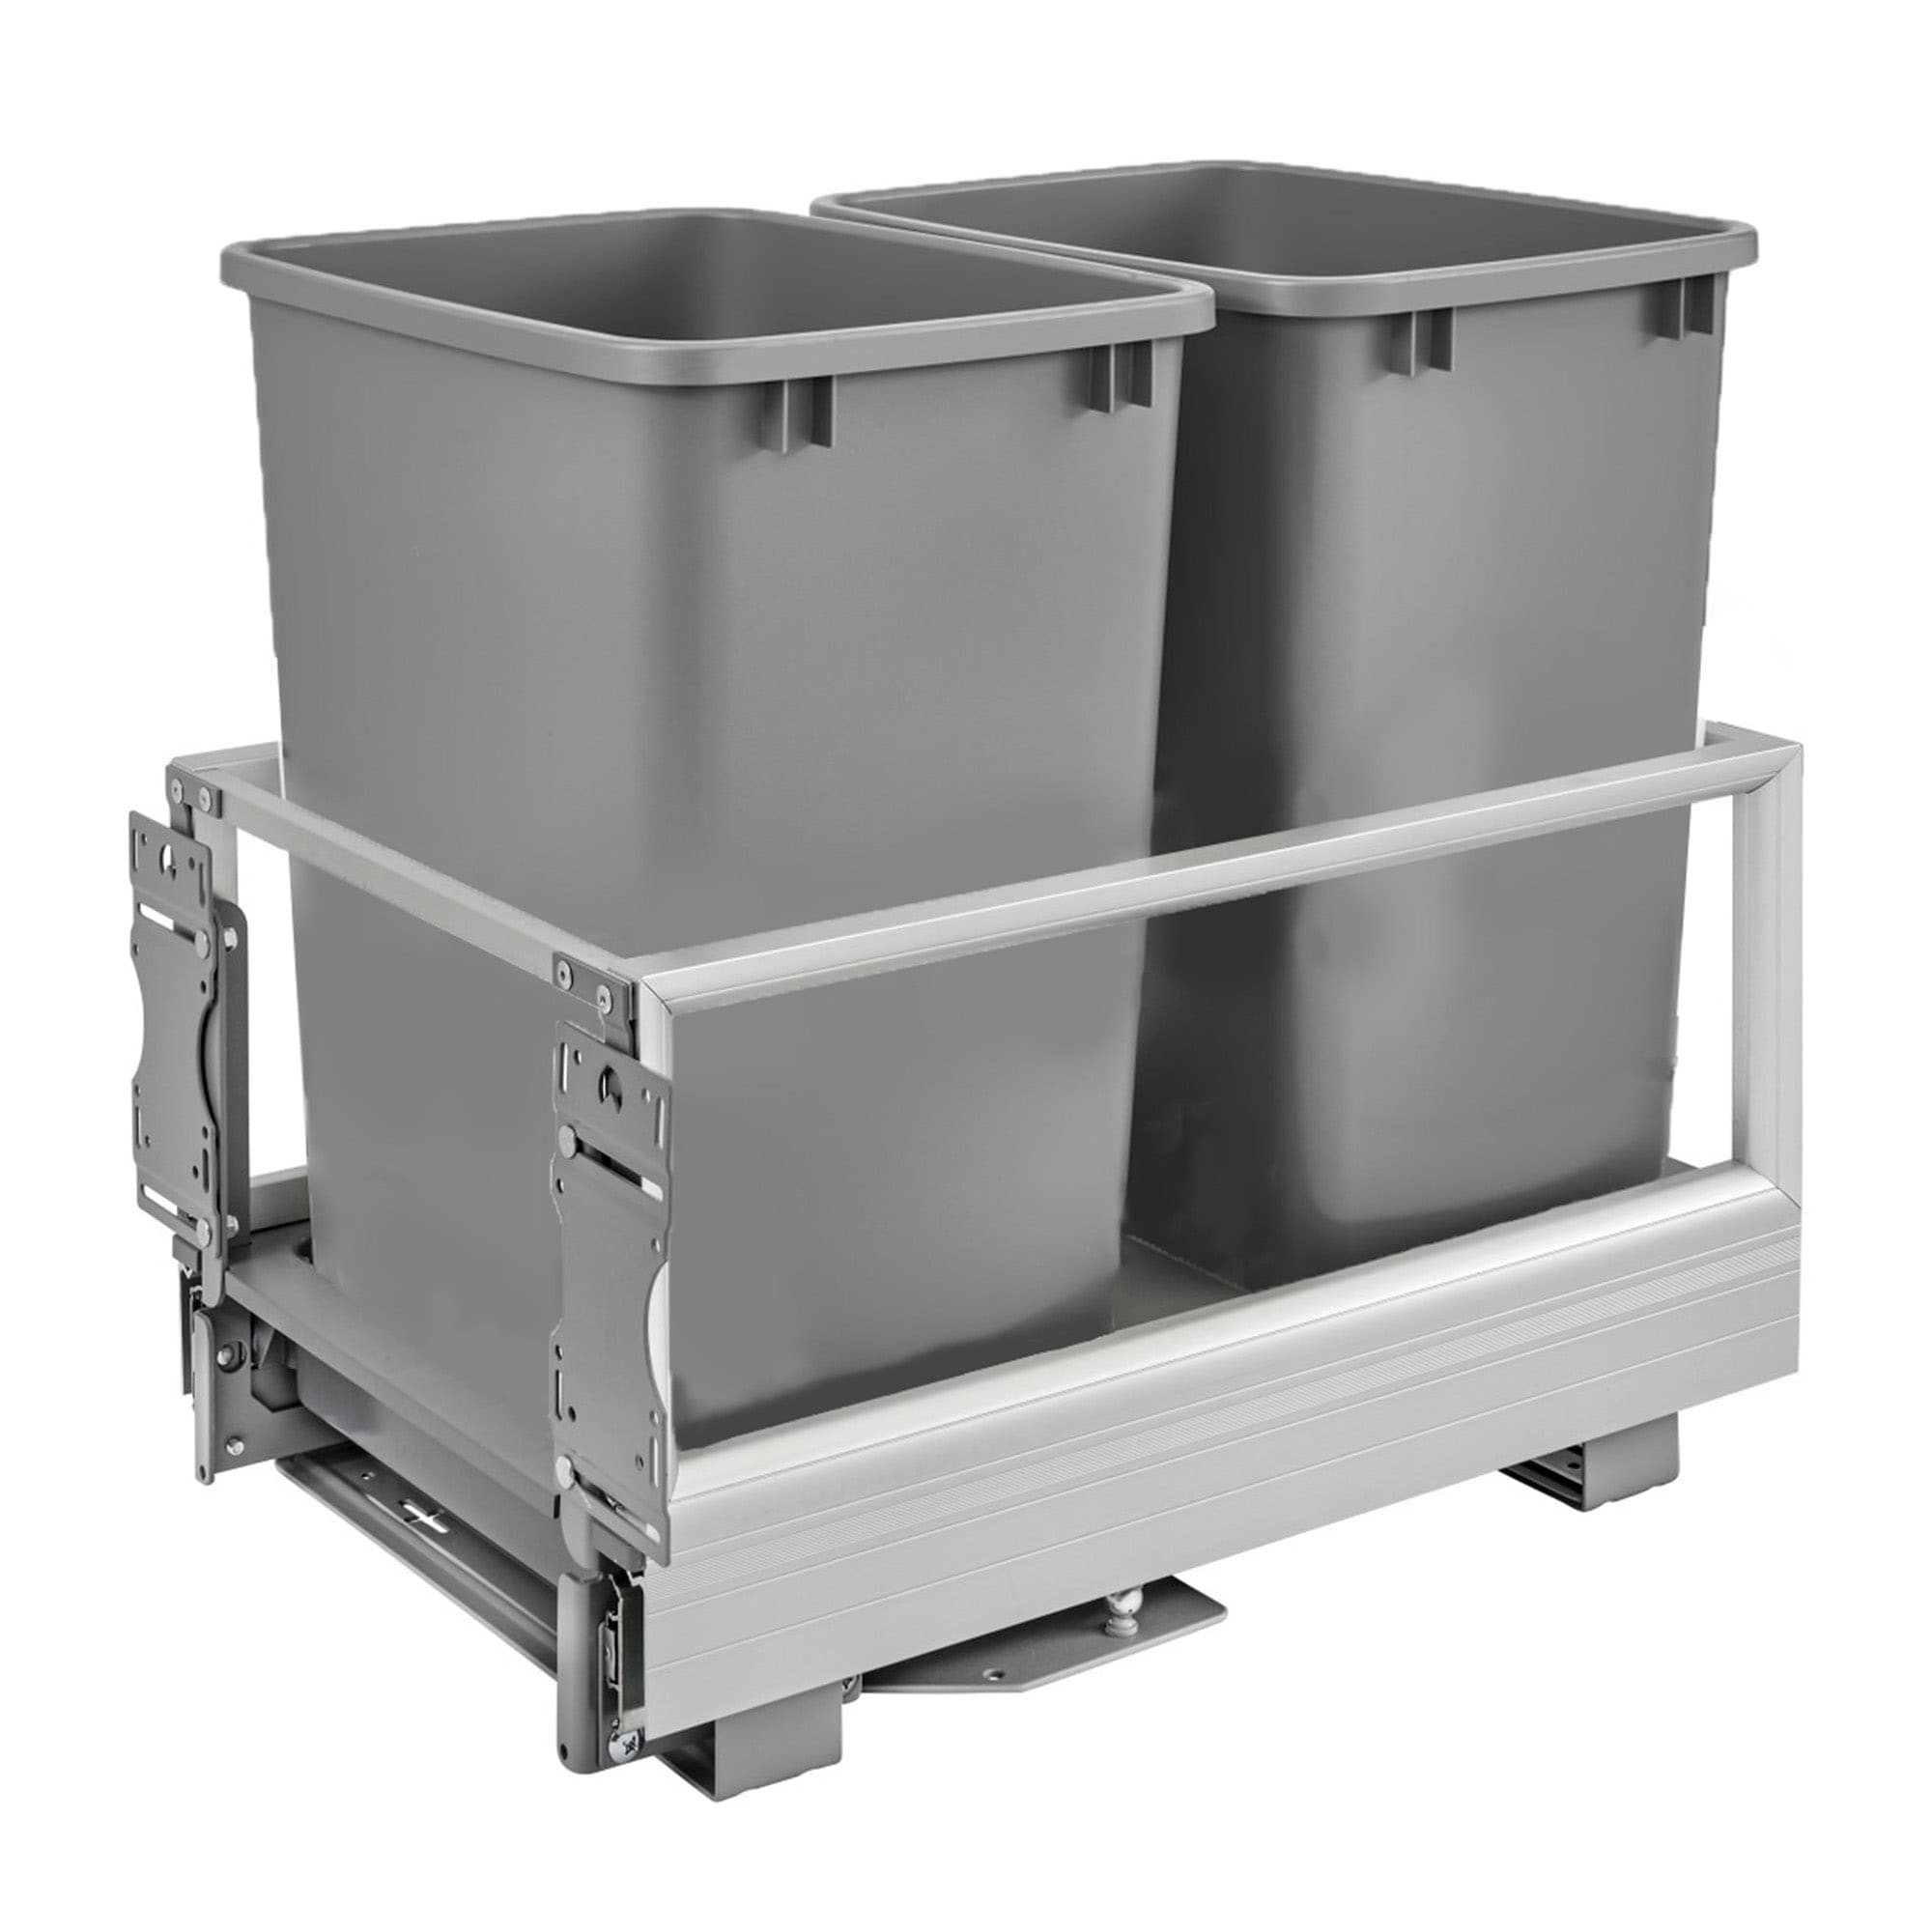 Rev-A-Shelf Heavy Duty Lift System, Silver